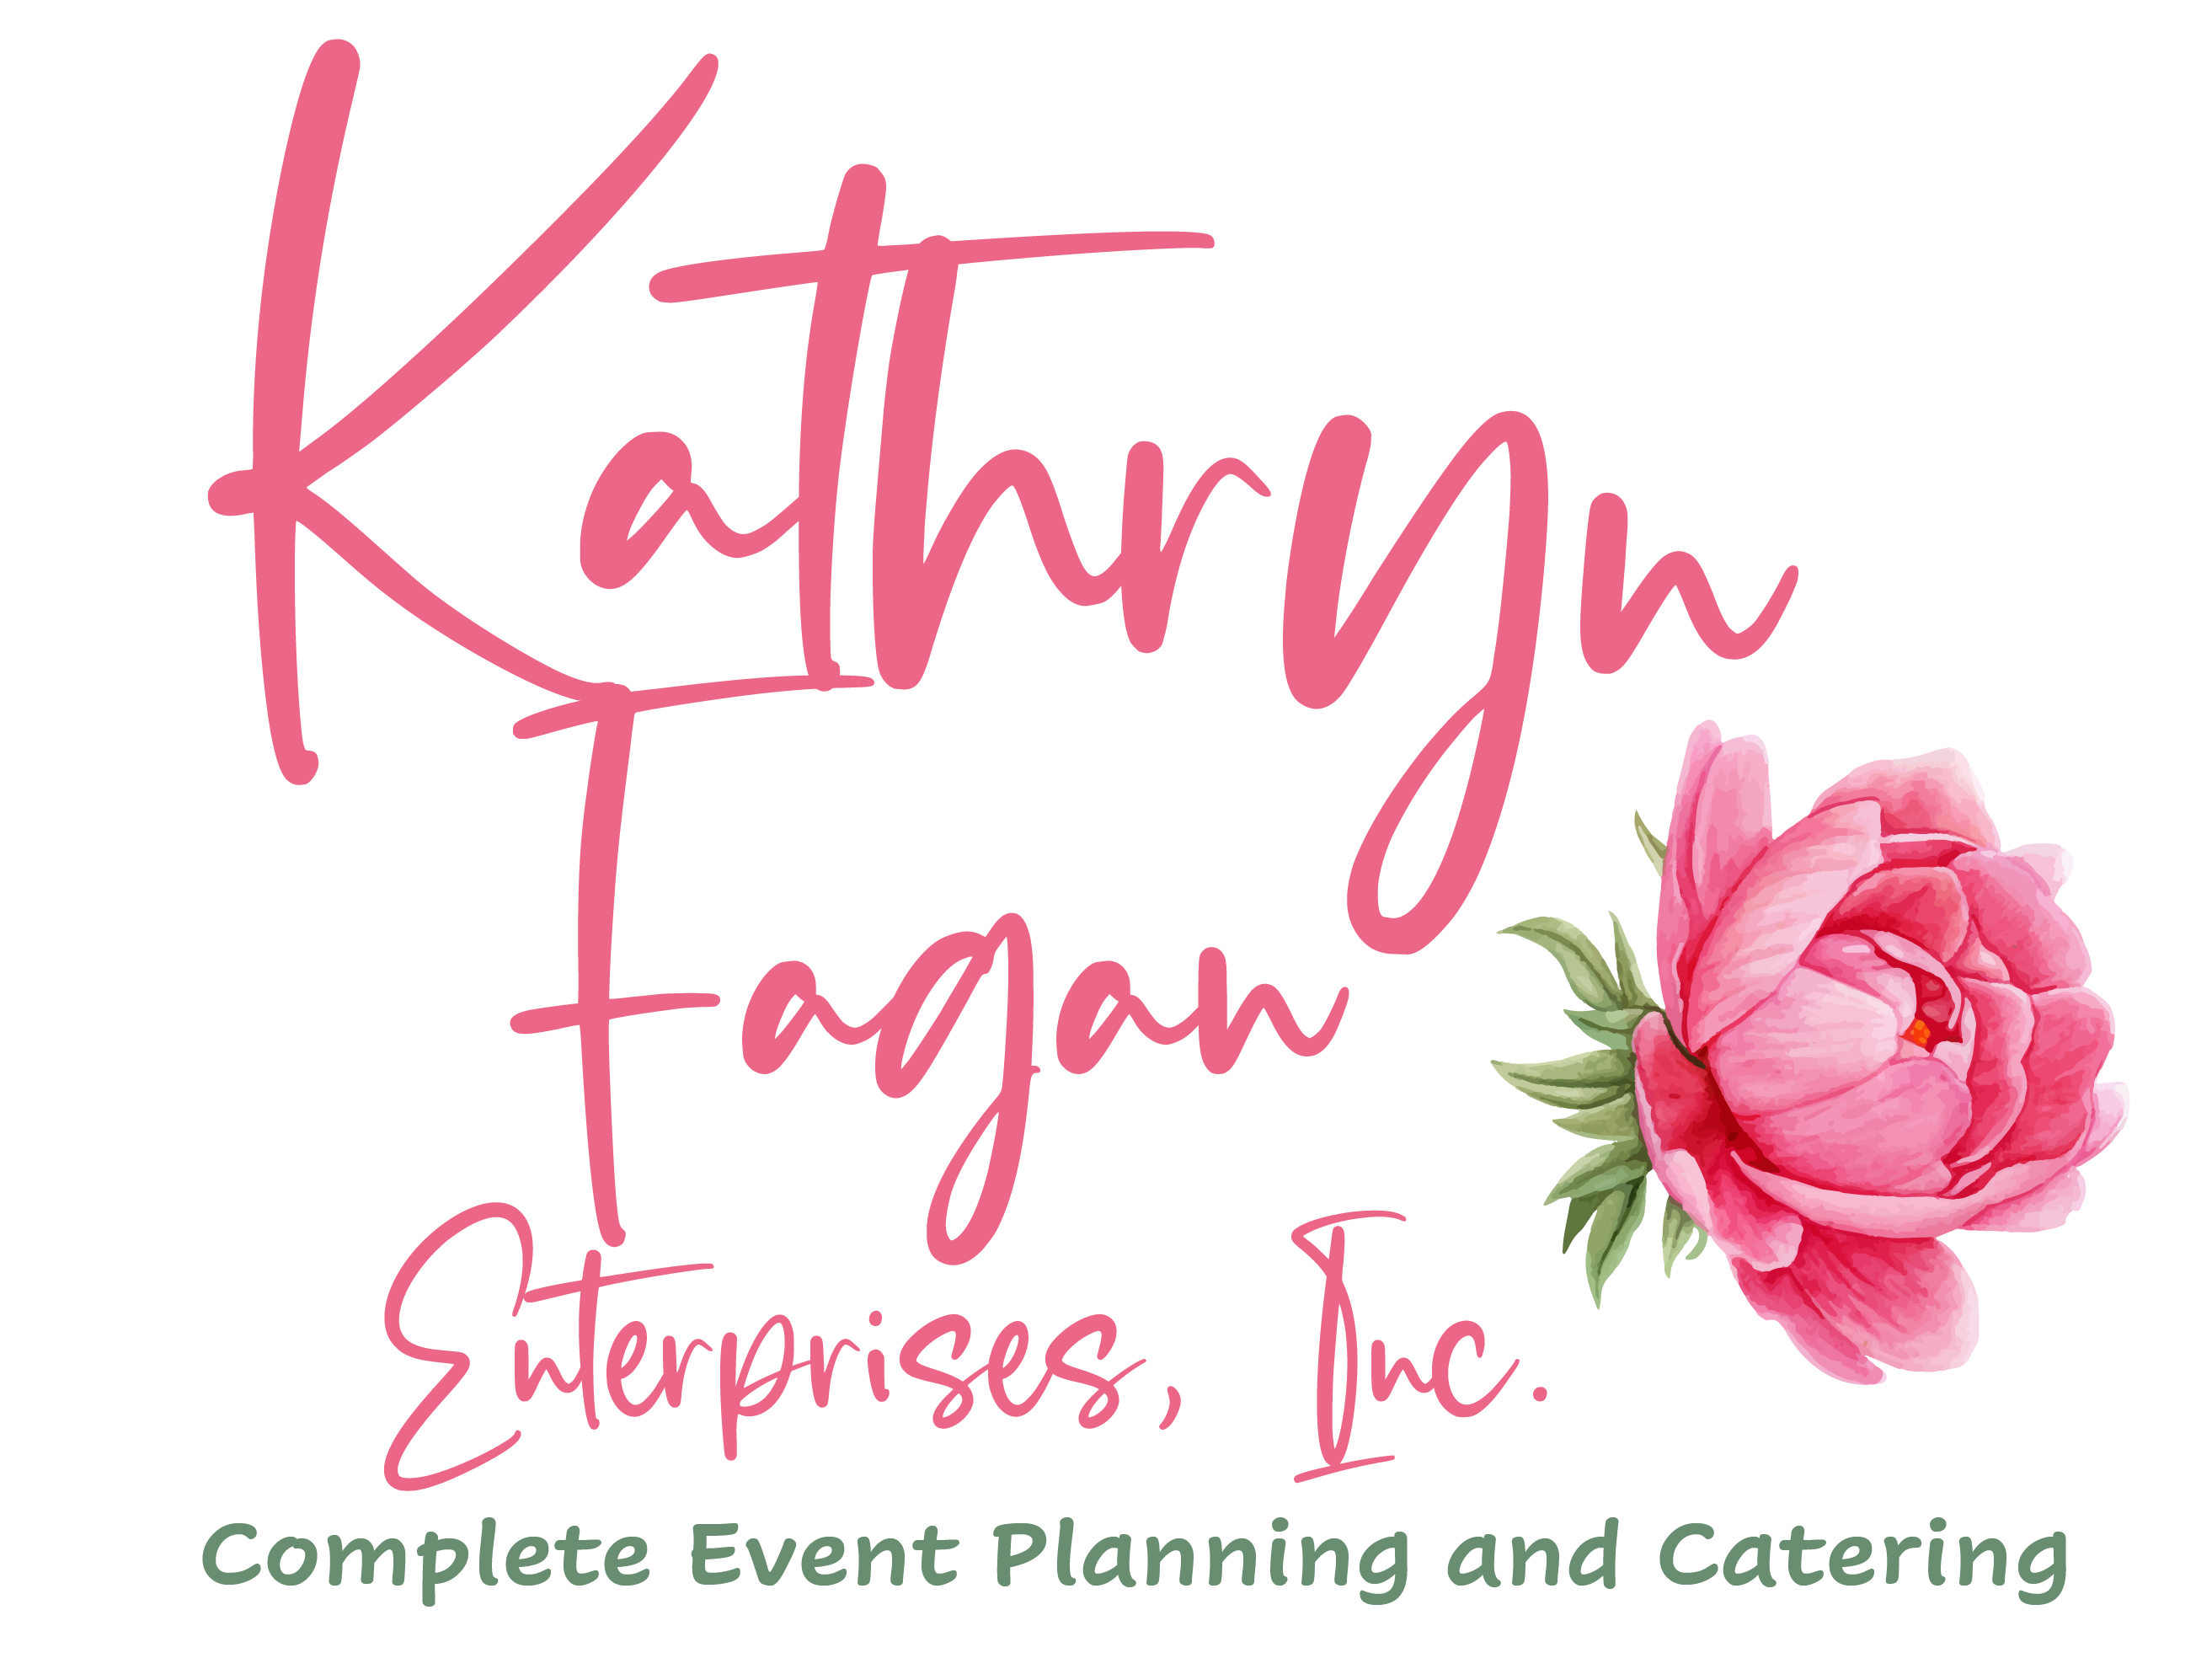 Kathryn Fagan Enterprises, Inc.